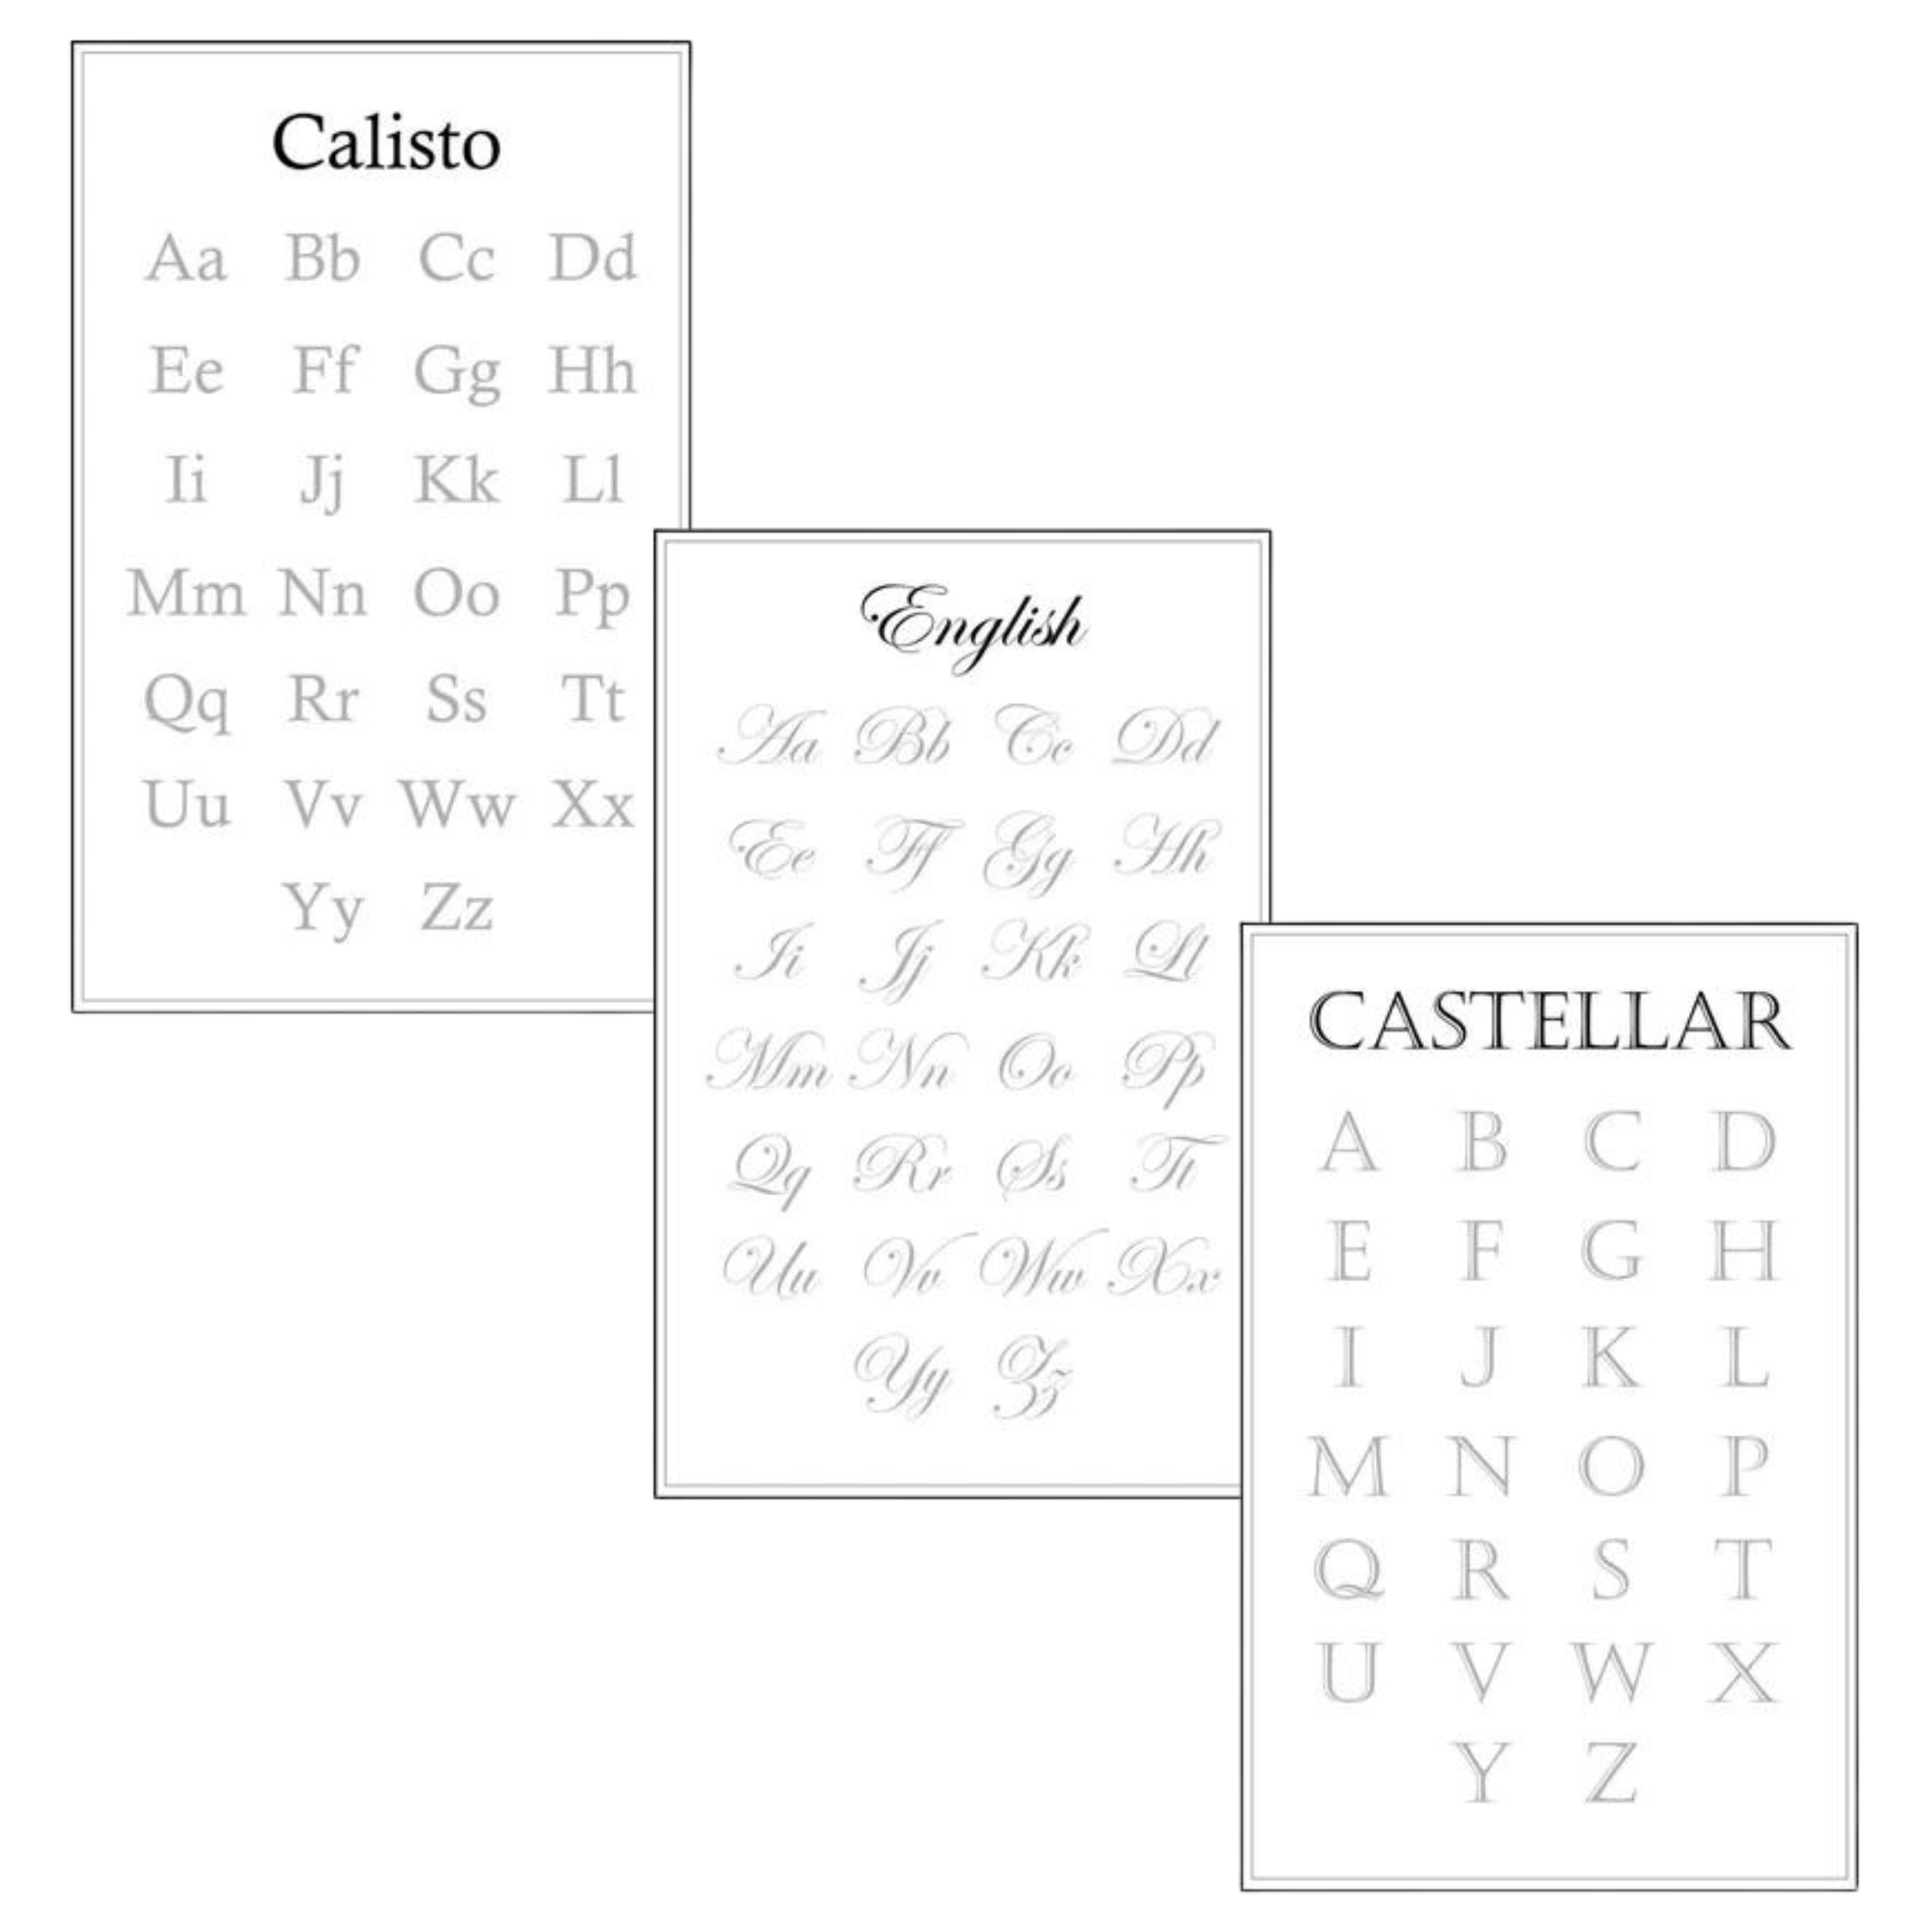 Image of Calisto, Castellar, and English custom engraving fonts